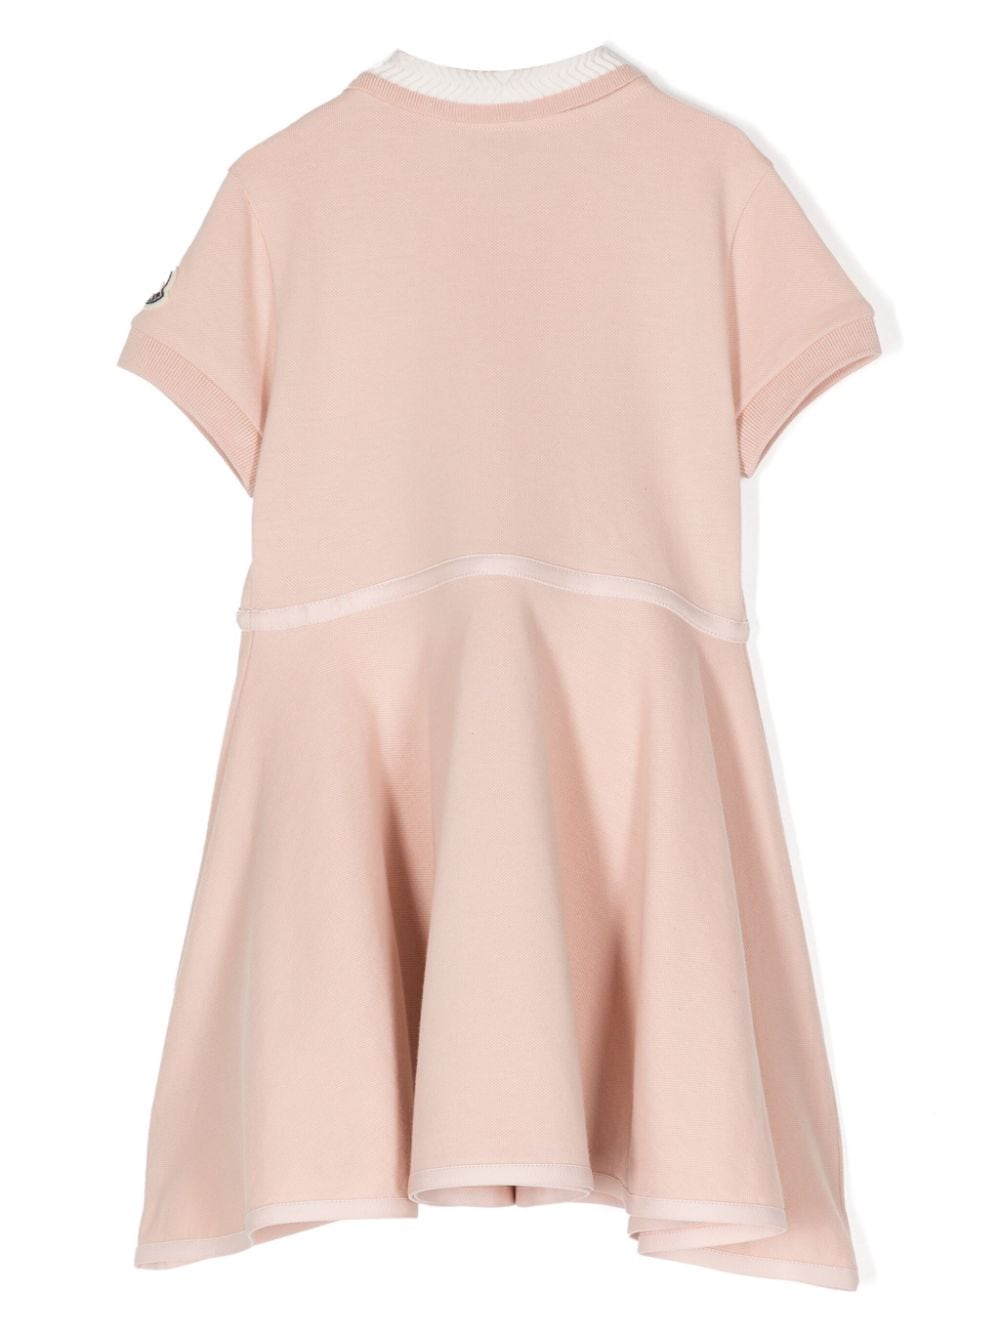 Moncler Enfant cotton polo shirt dress - Roze